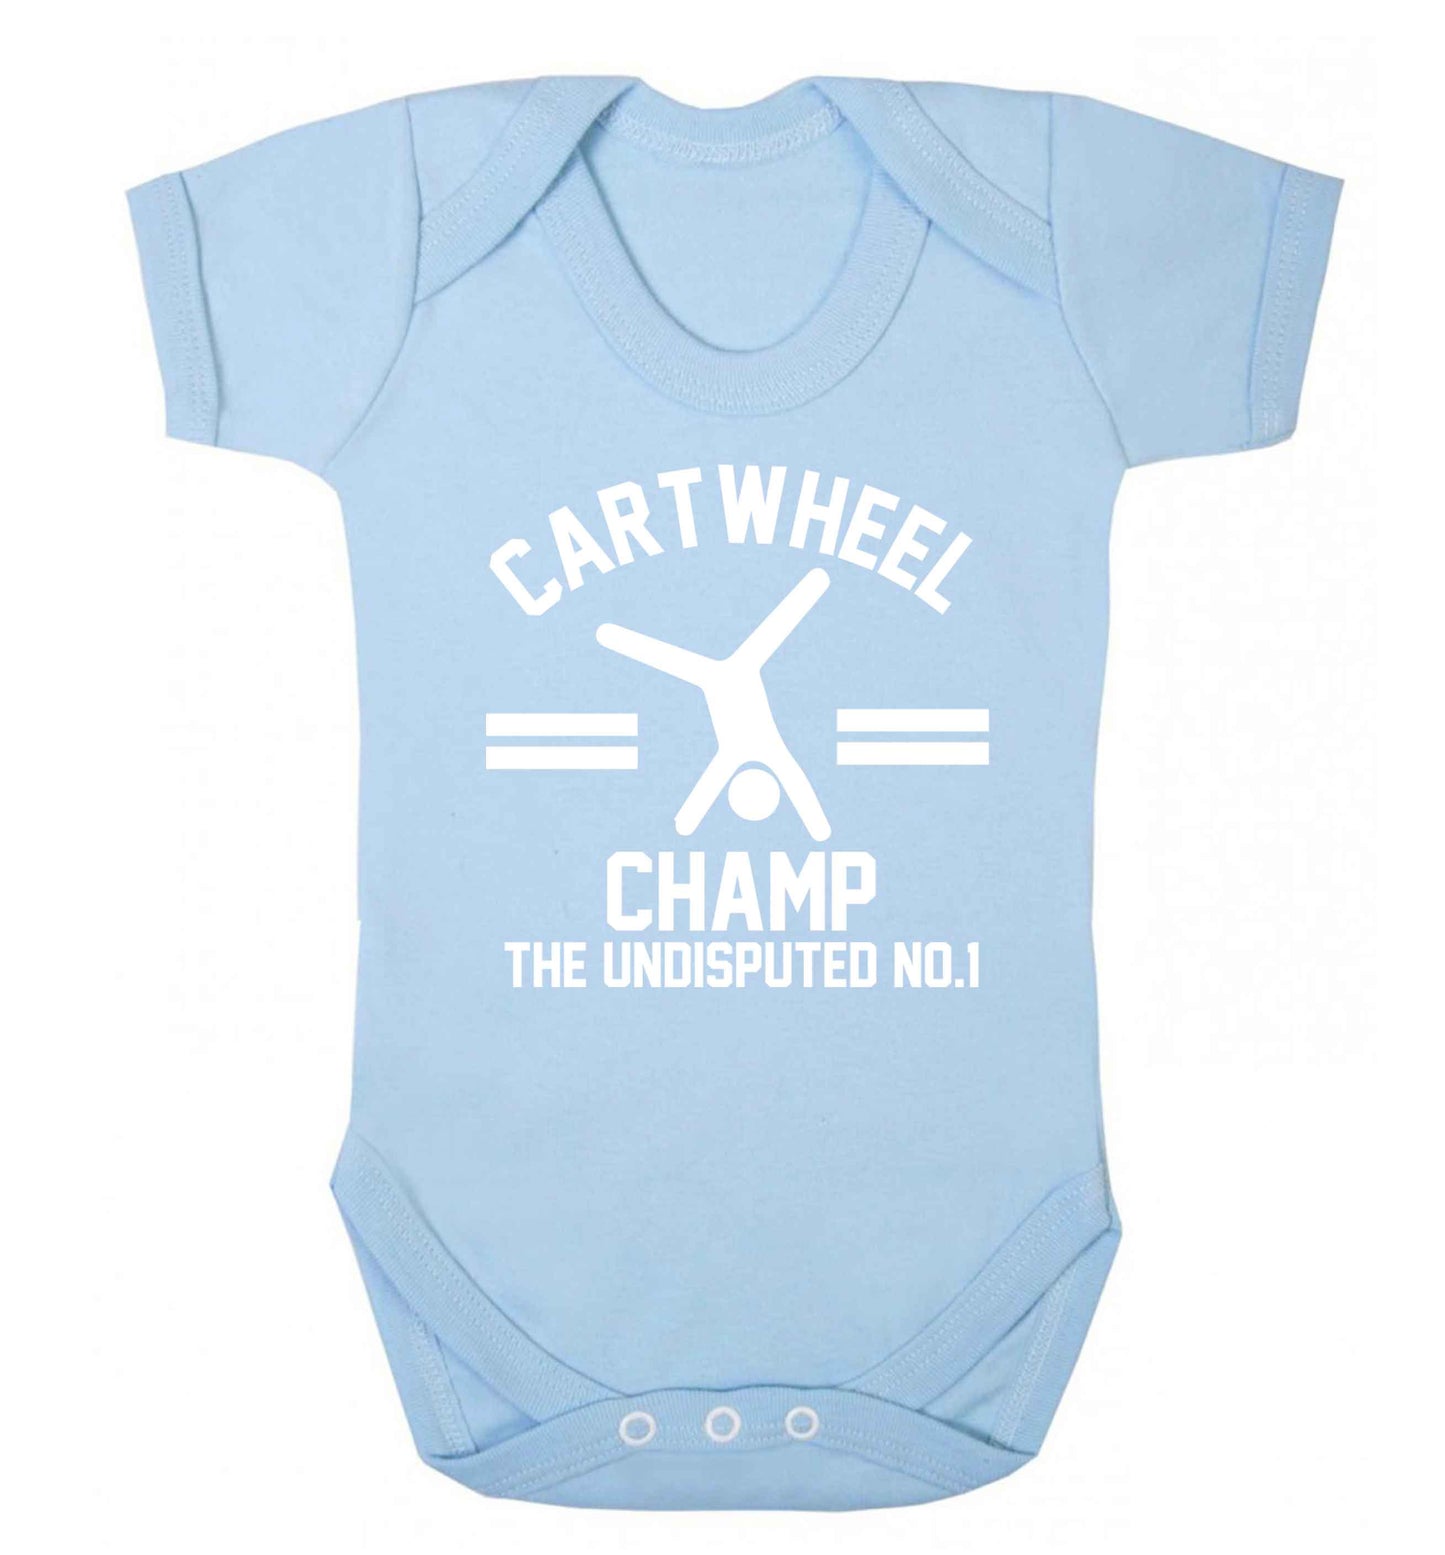 Undisputed cartwheel championship no.1  Baby Vest pale blue 18-24 months